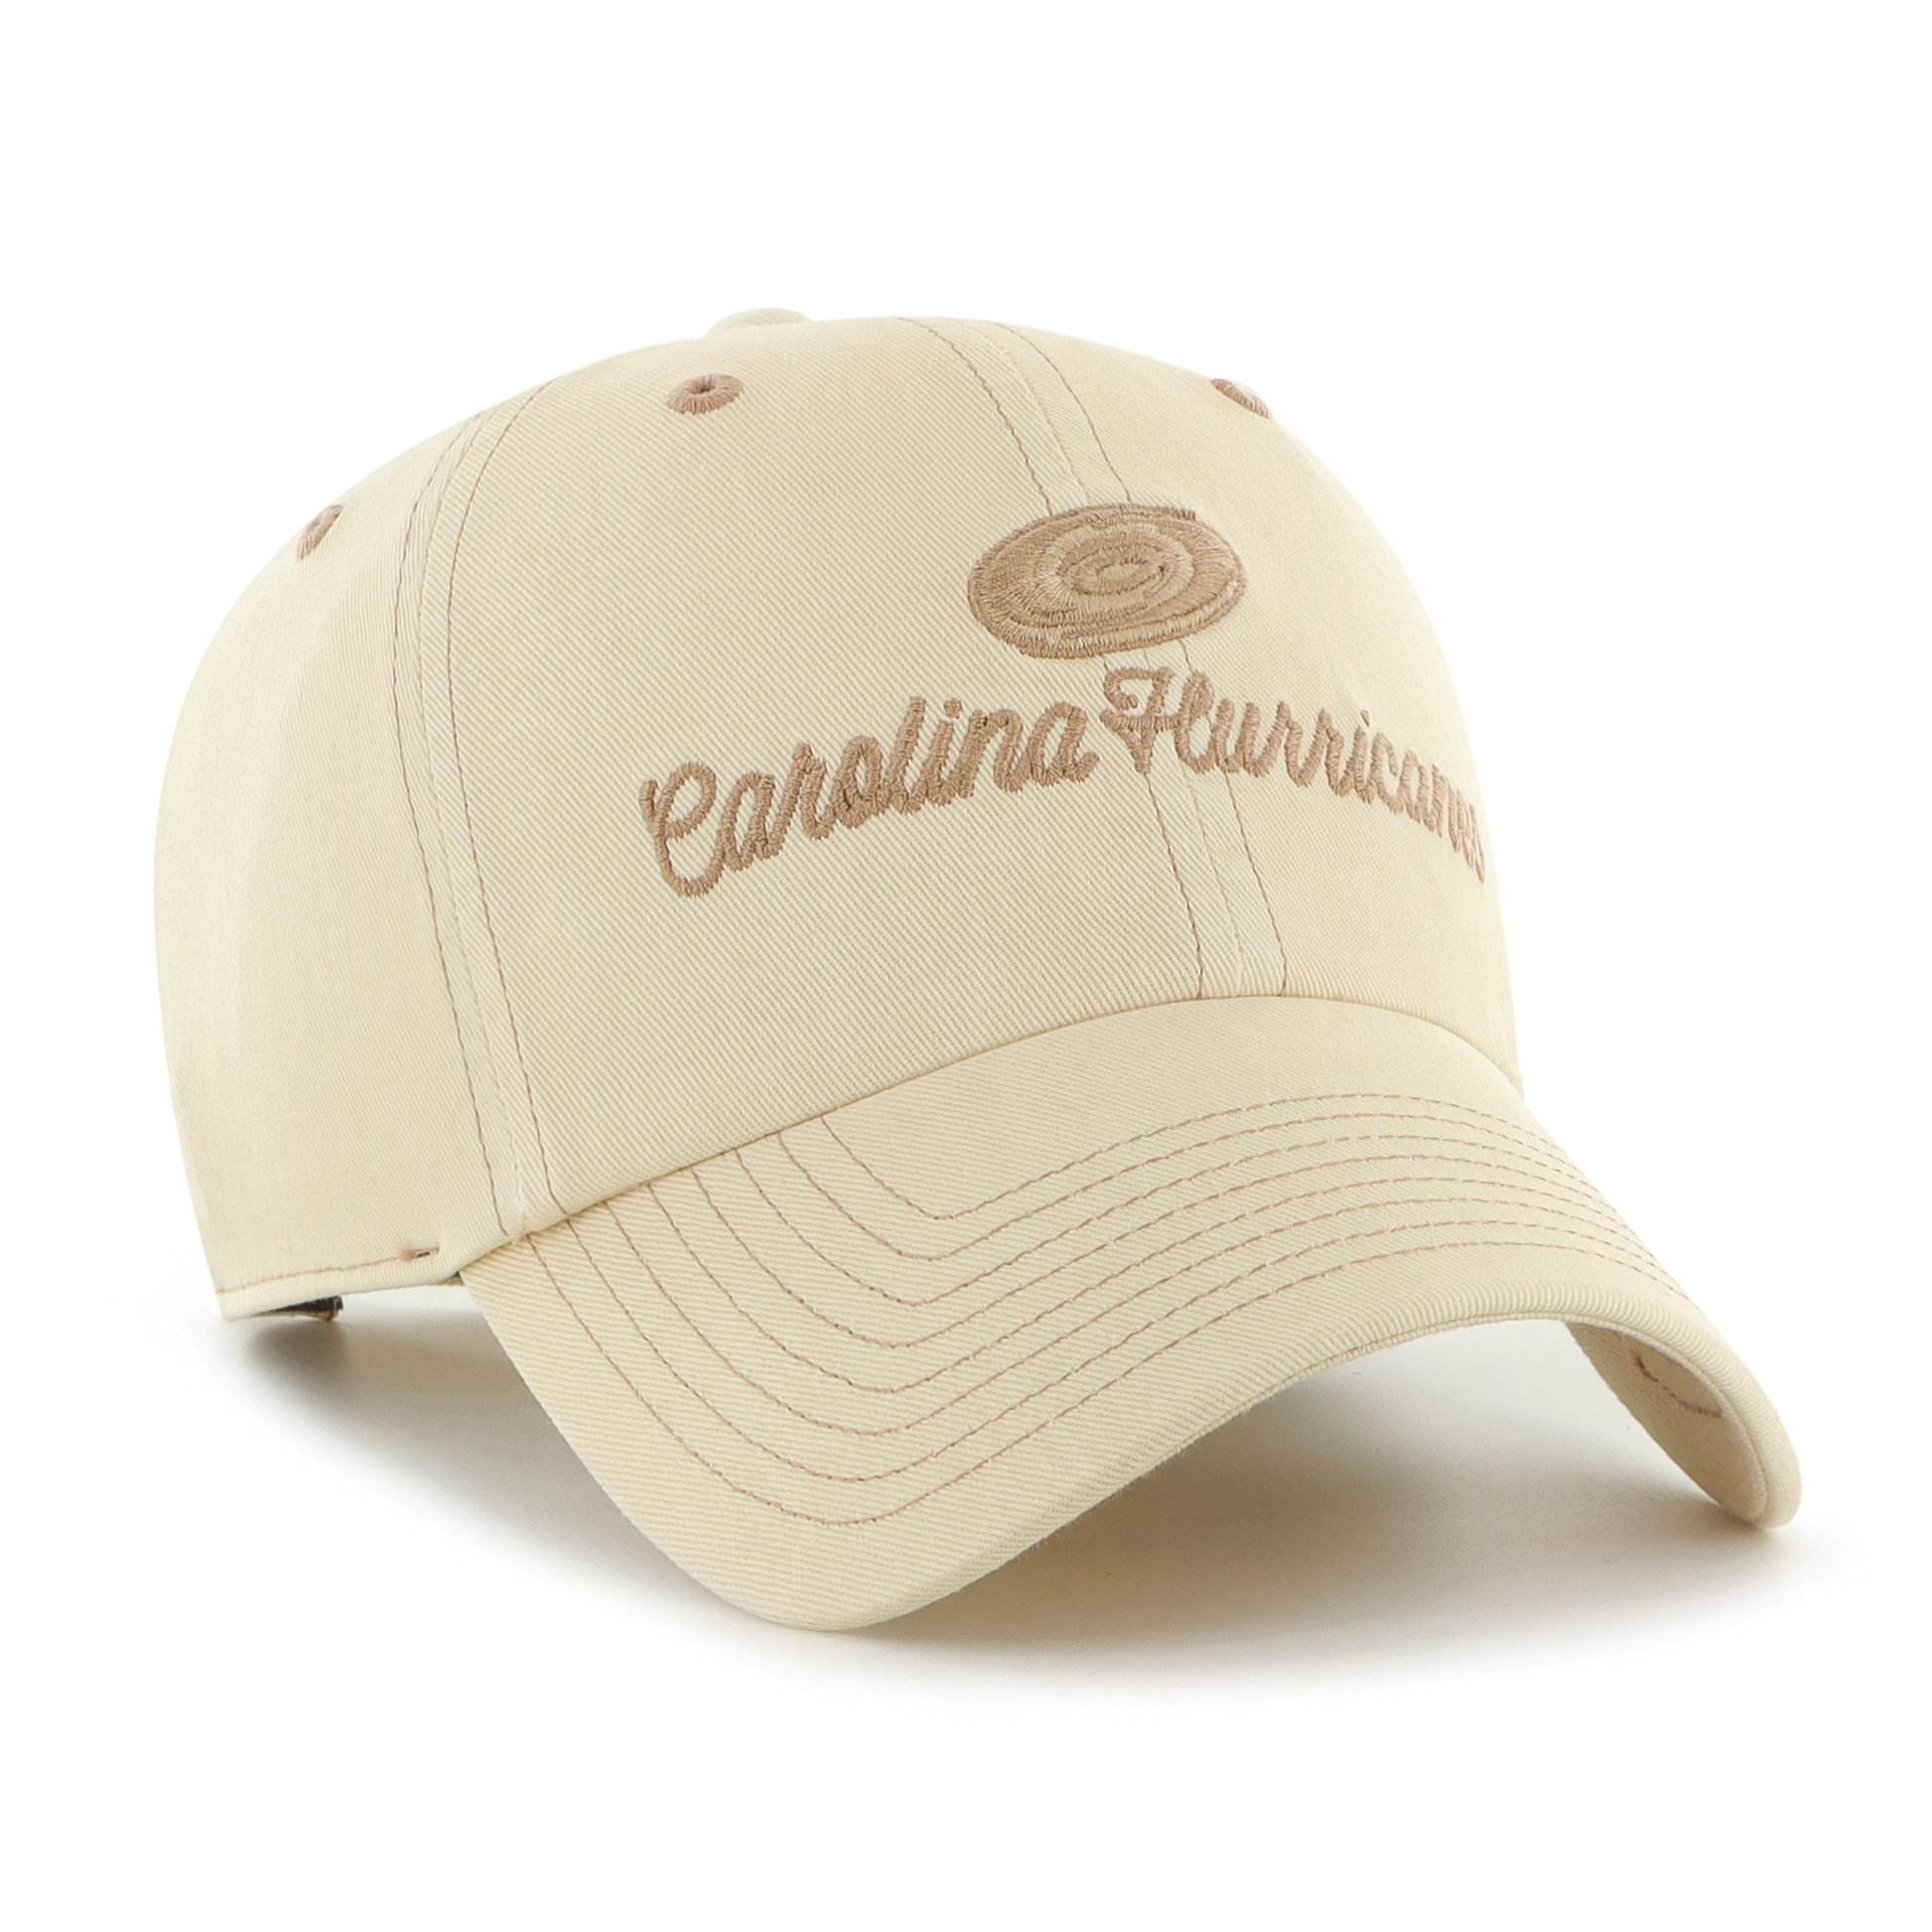 Front 2: Cream hat with Carolina Hurricanes, Eye logo on front